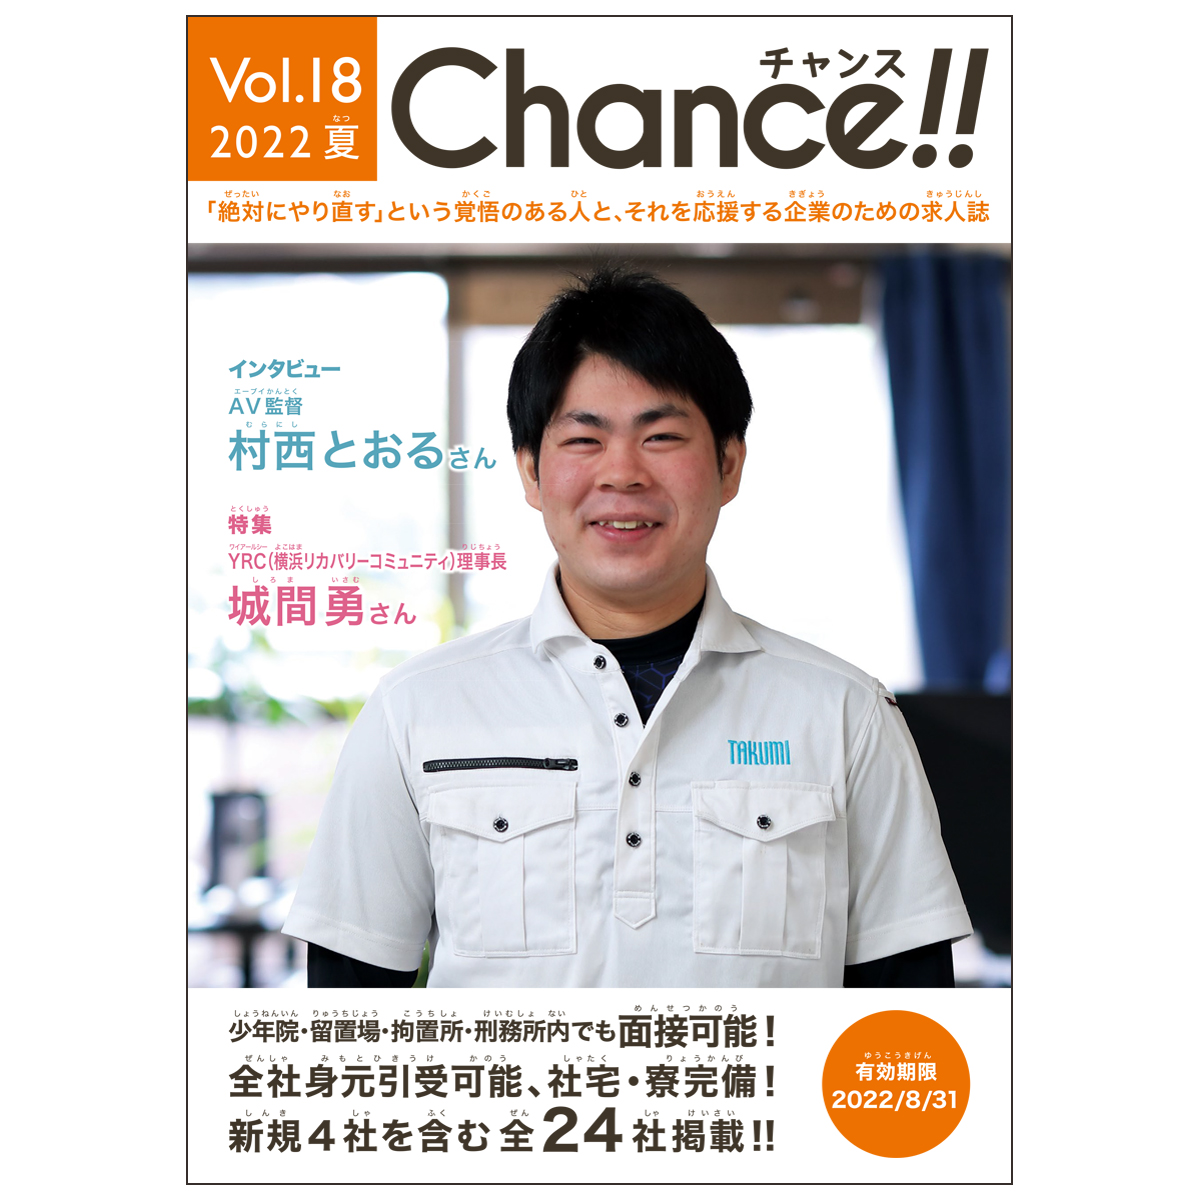 Chance!!Vol.18